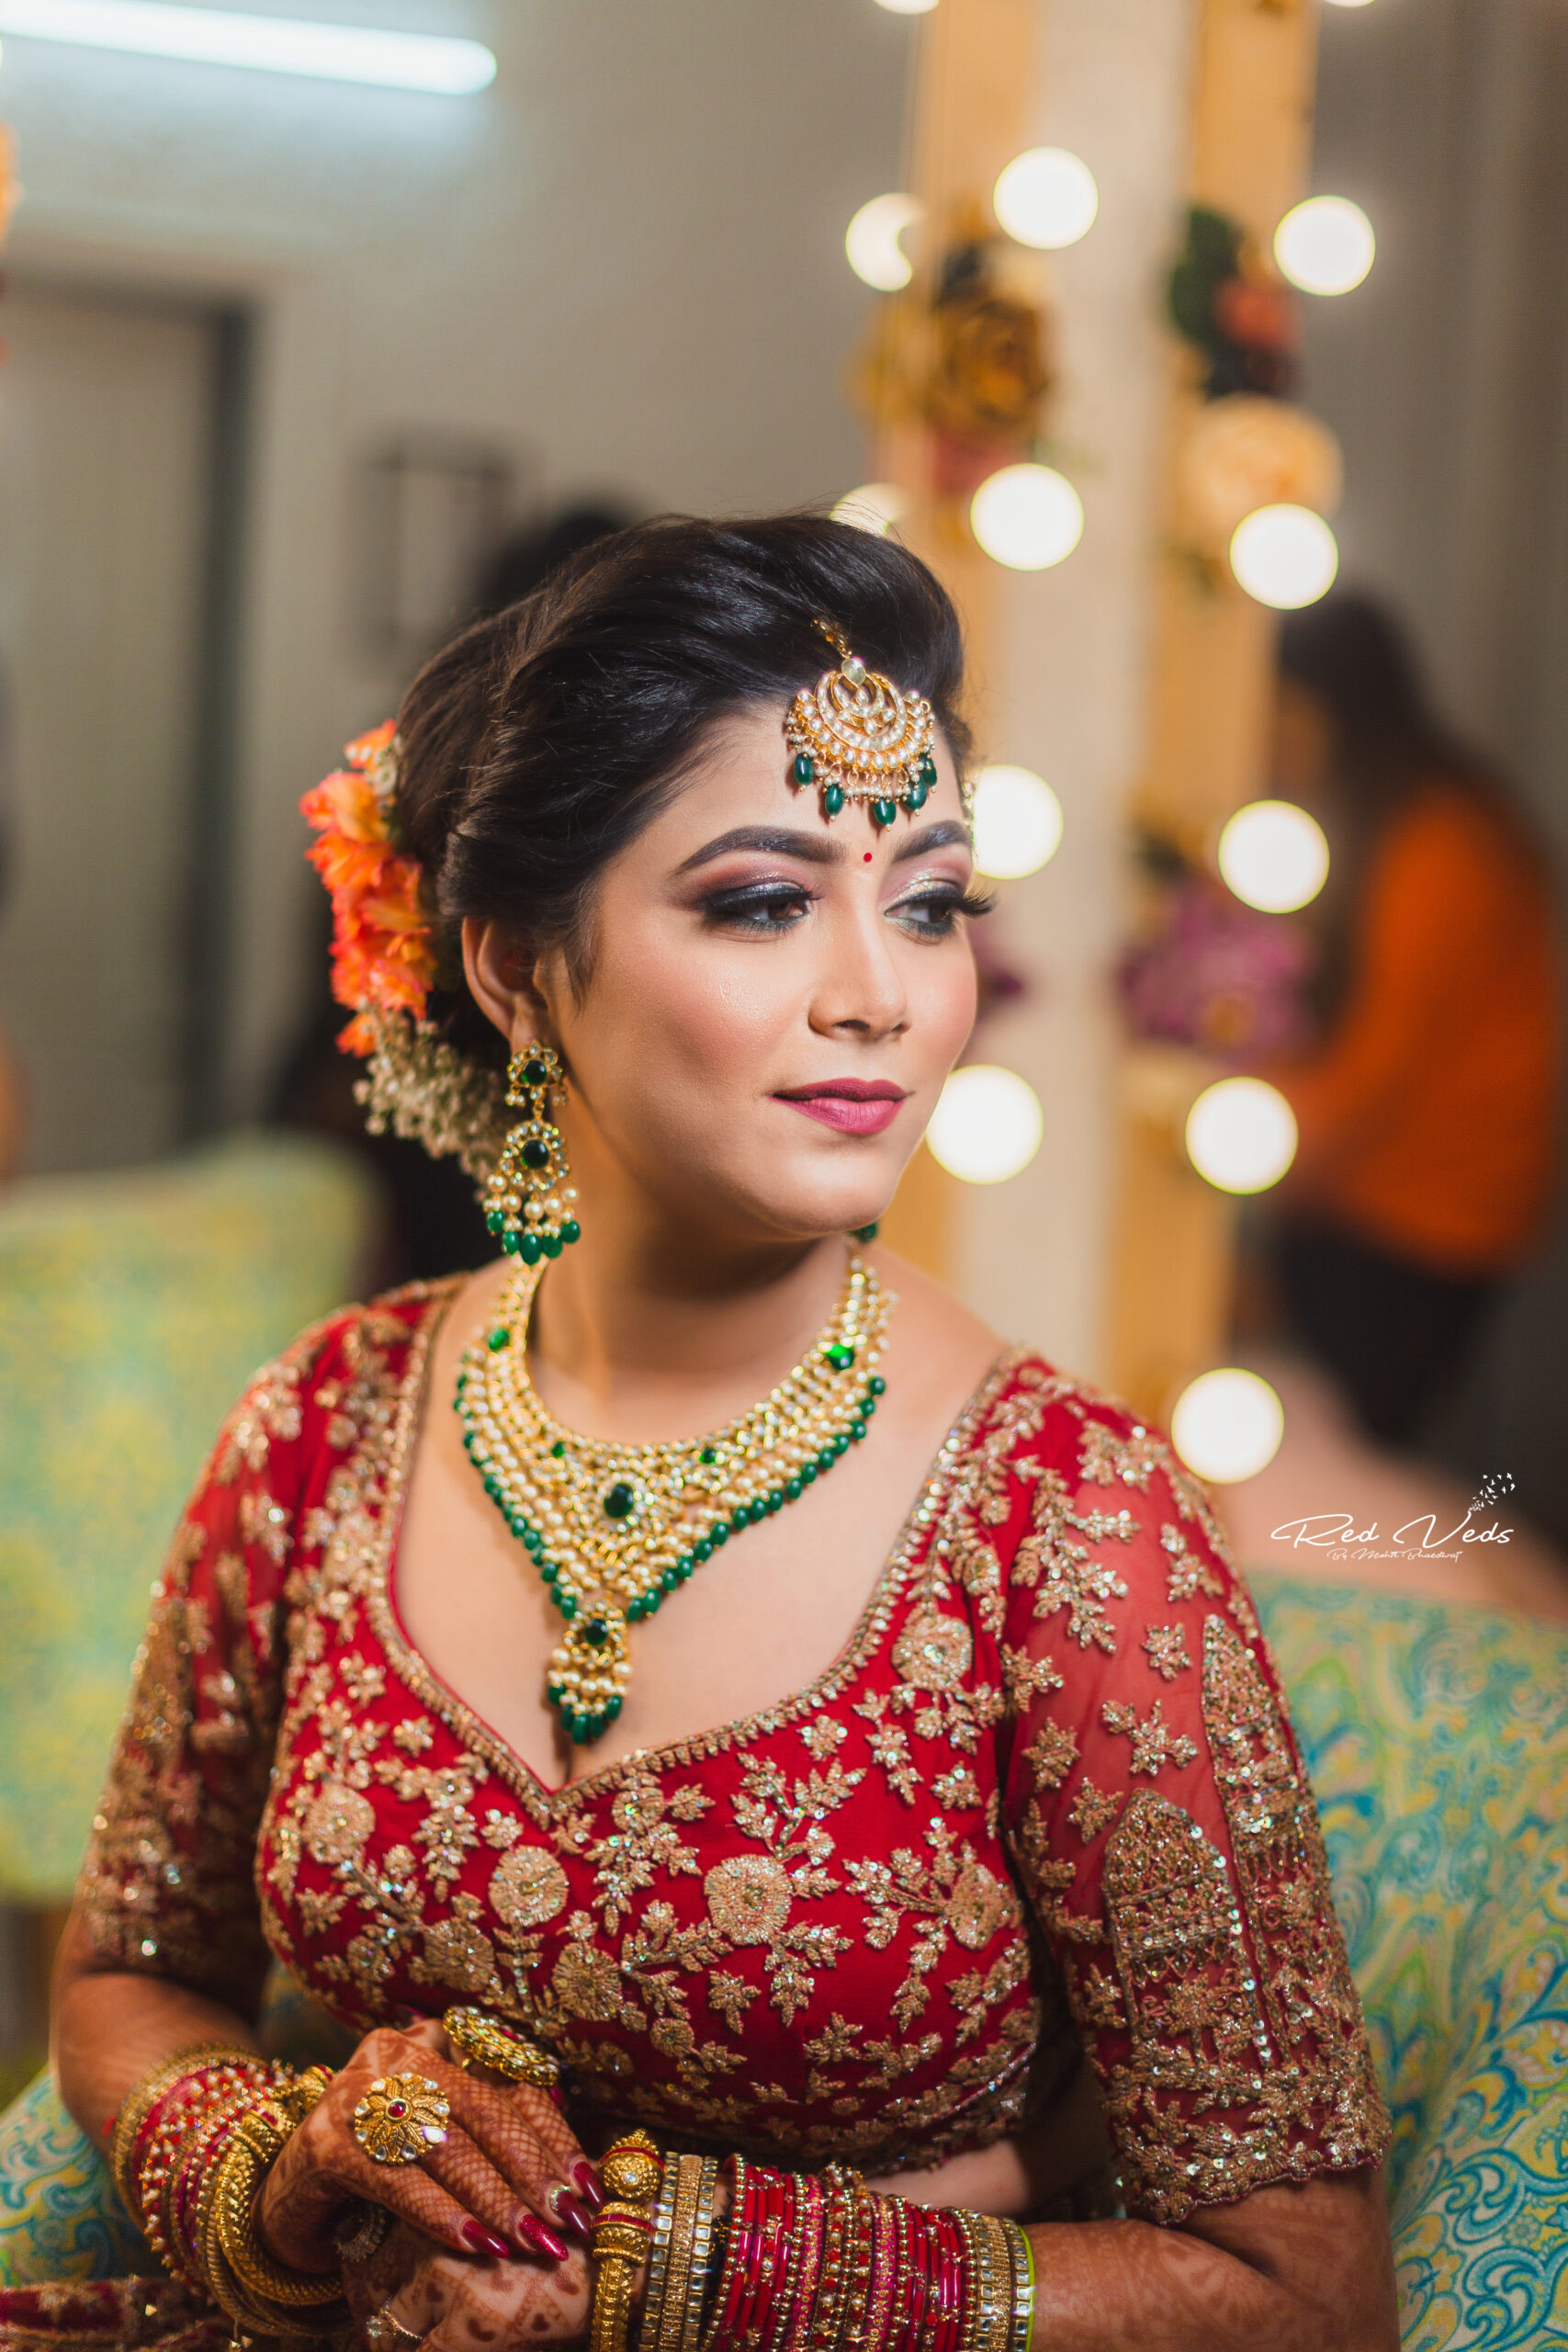 South Indian wedding by Parinay Pixels | Bridestory.com